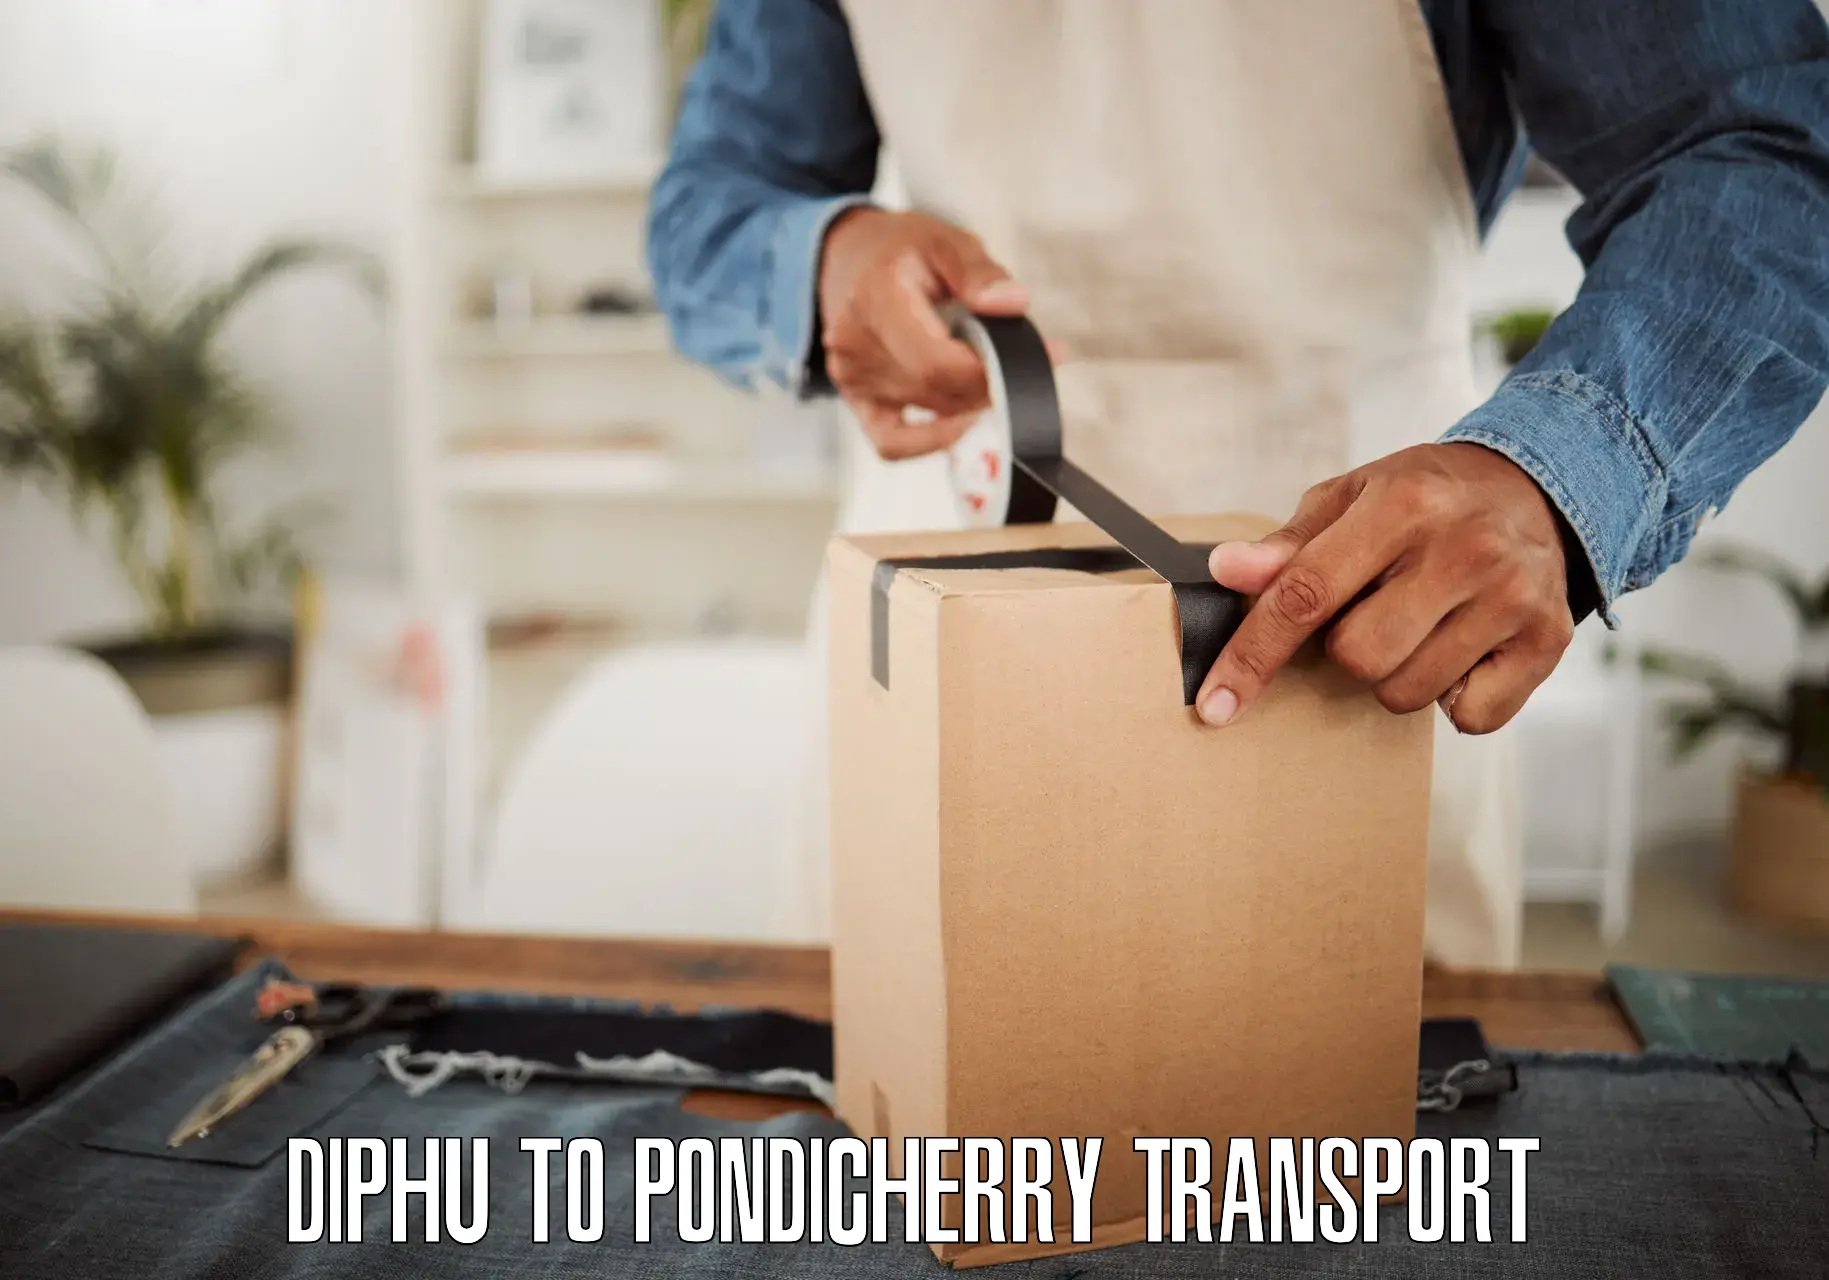 Furniture transport service Diphu to Pondicherry University